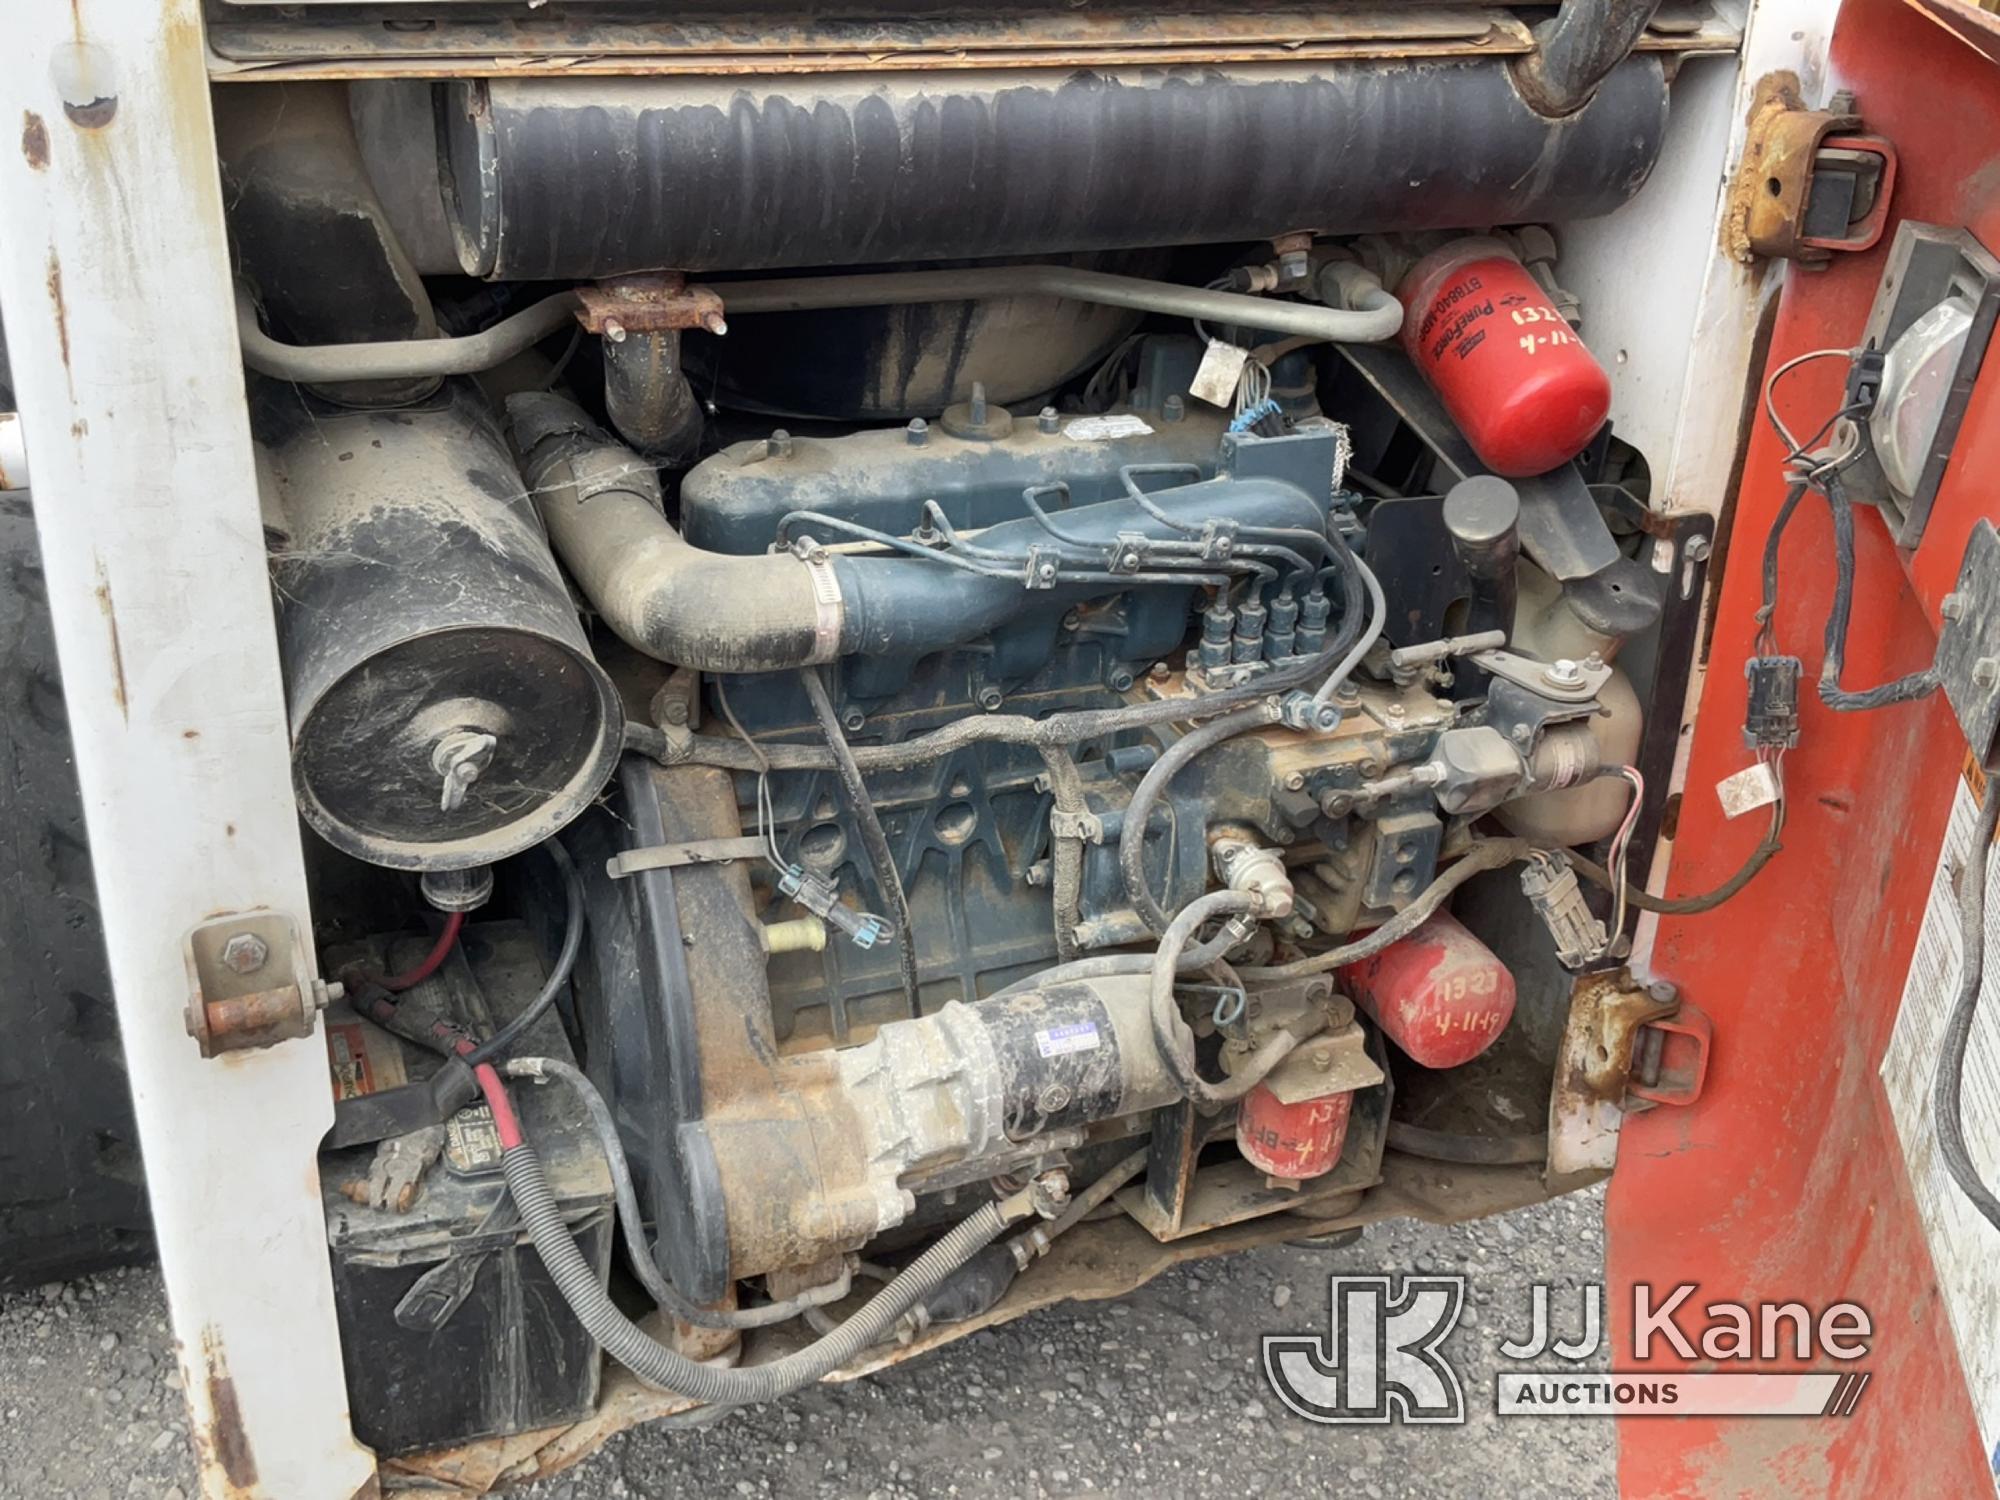 (Jurupa Valley, CA) Bobcat 763 Engine Runs, Does Not Stay Running Without Battery Jumper